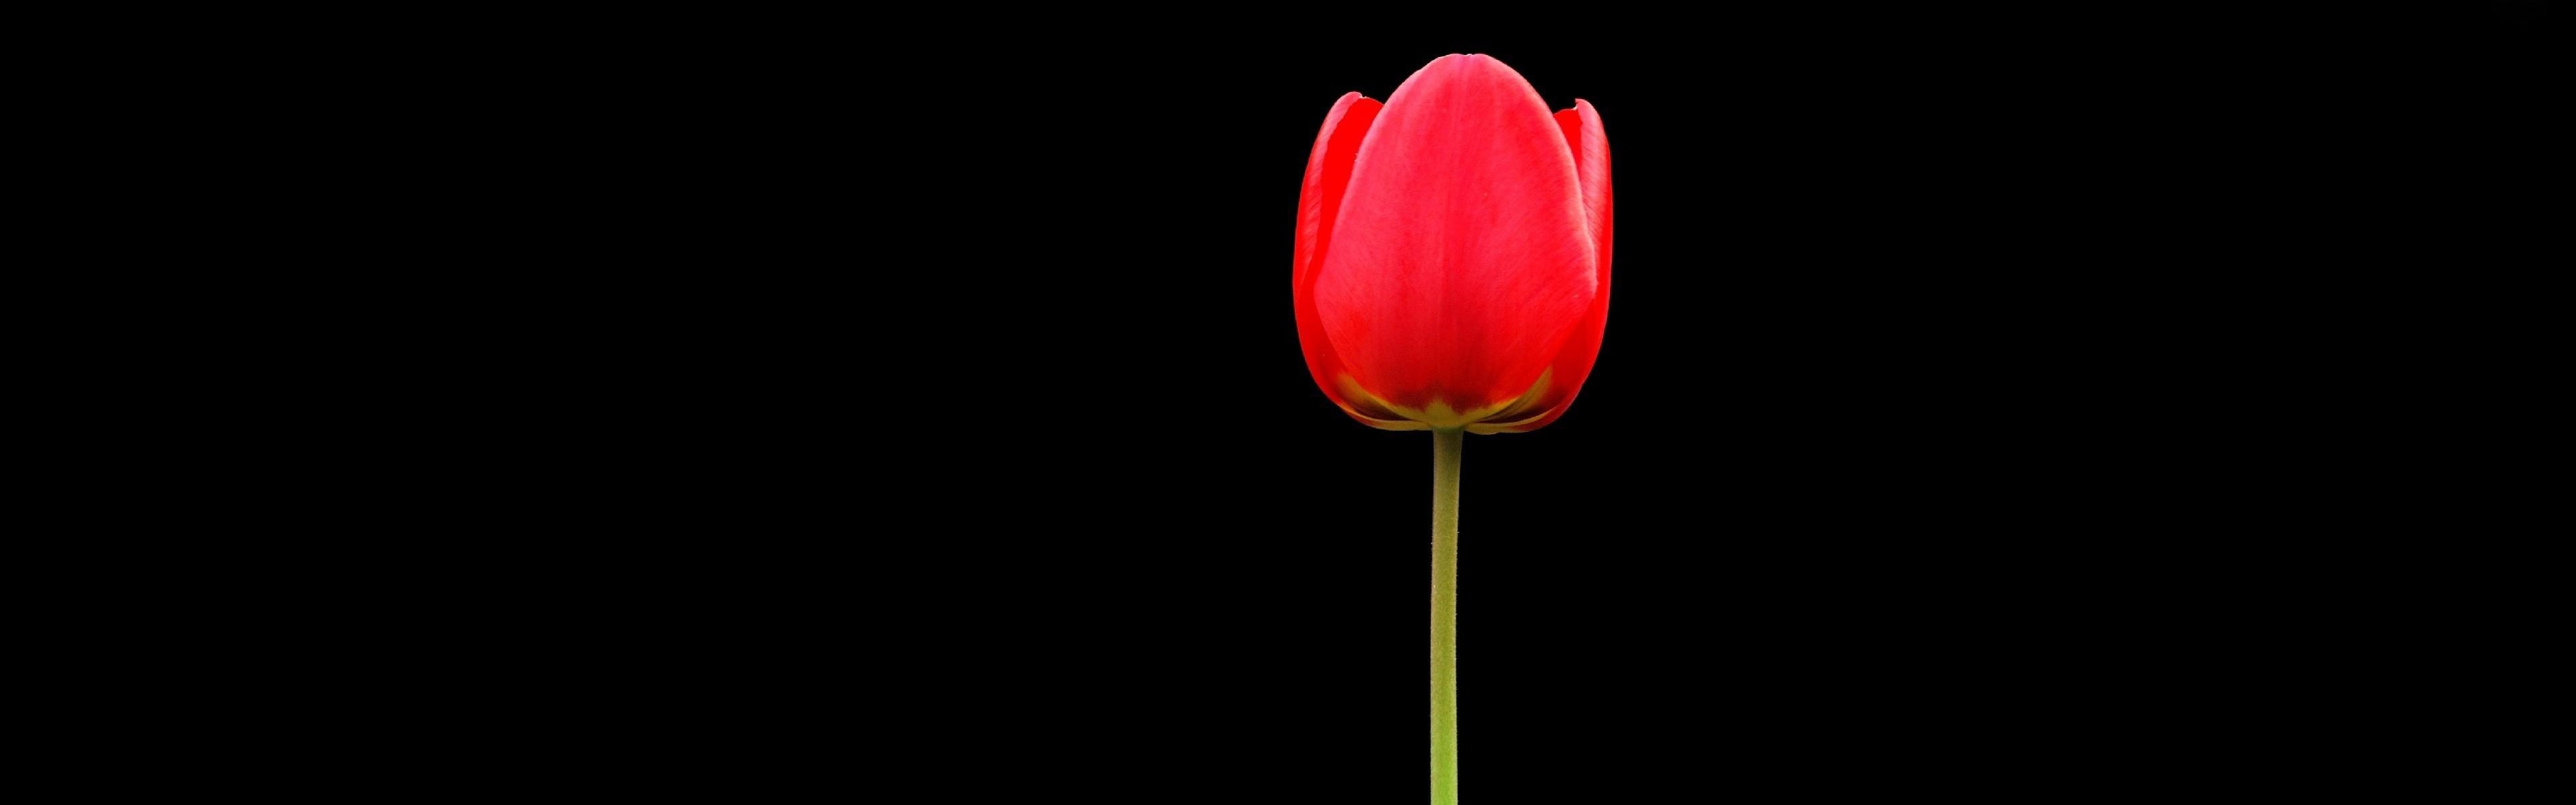 Wallpaper Tulip Red Flower One